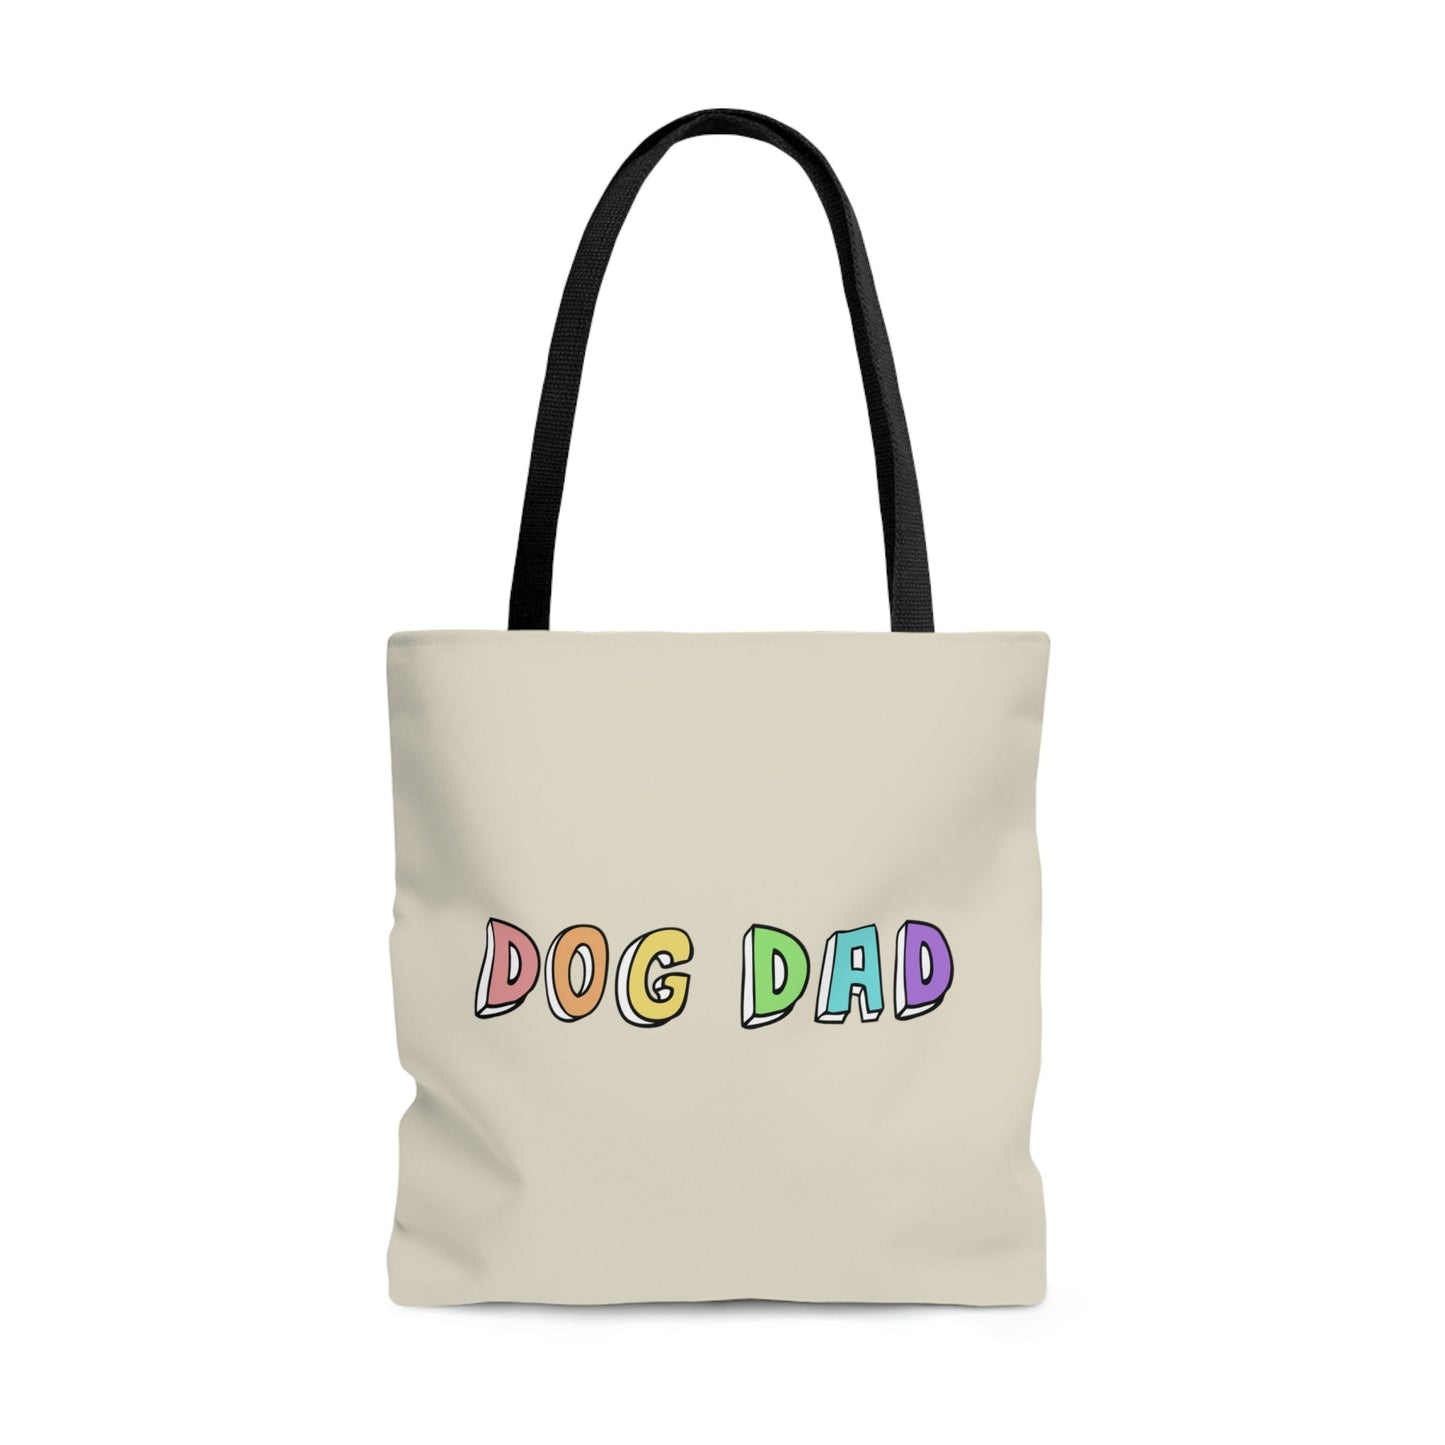 Dog Dad | Tote Bag - Detezi Designs-31127344938703357285